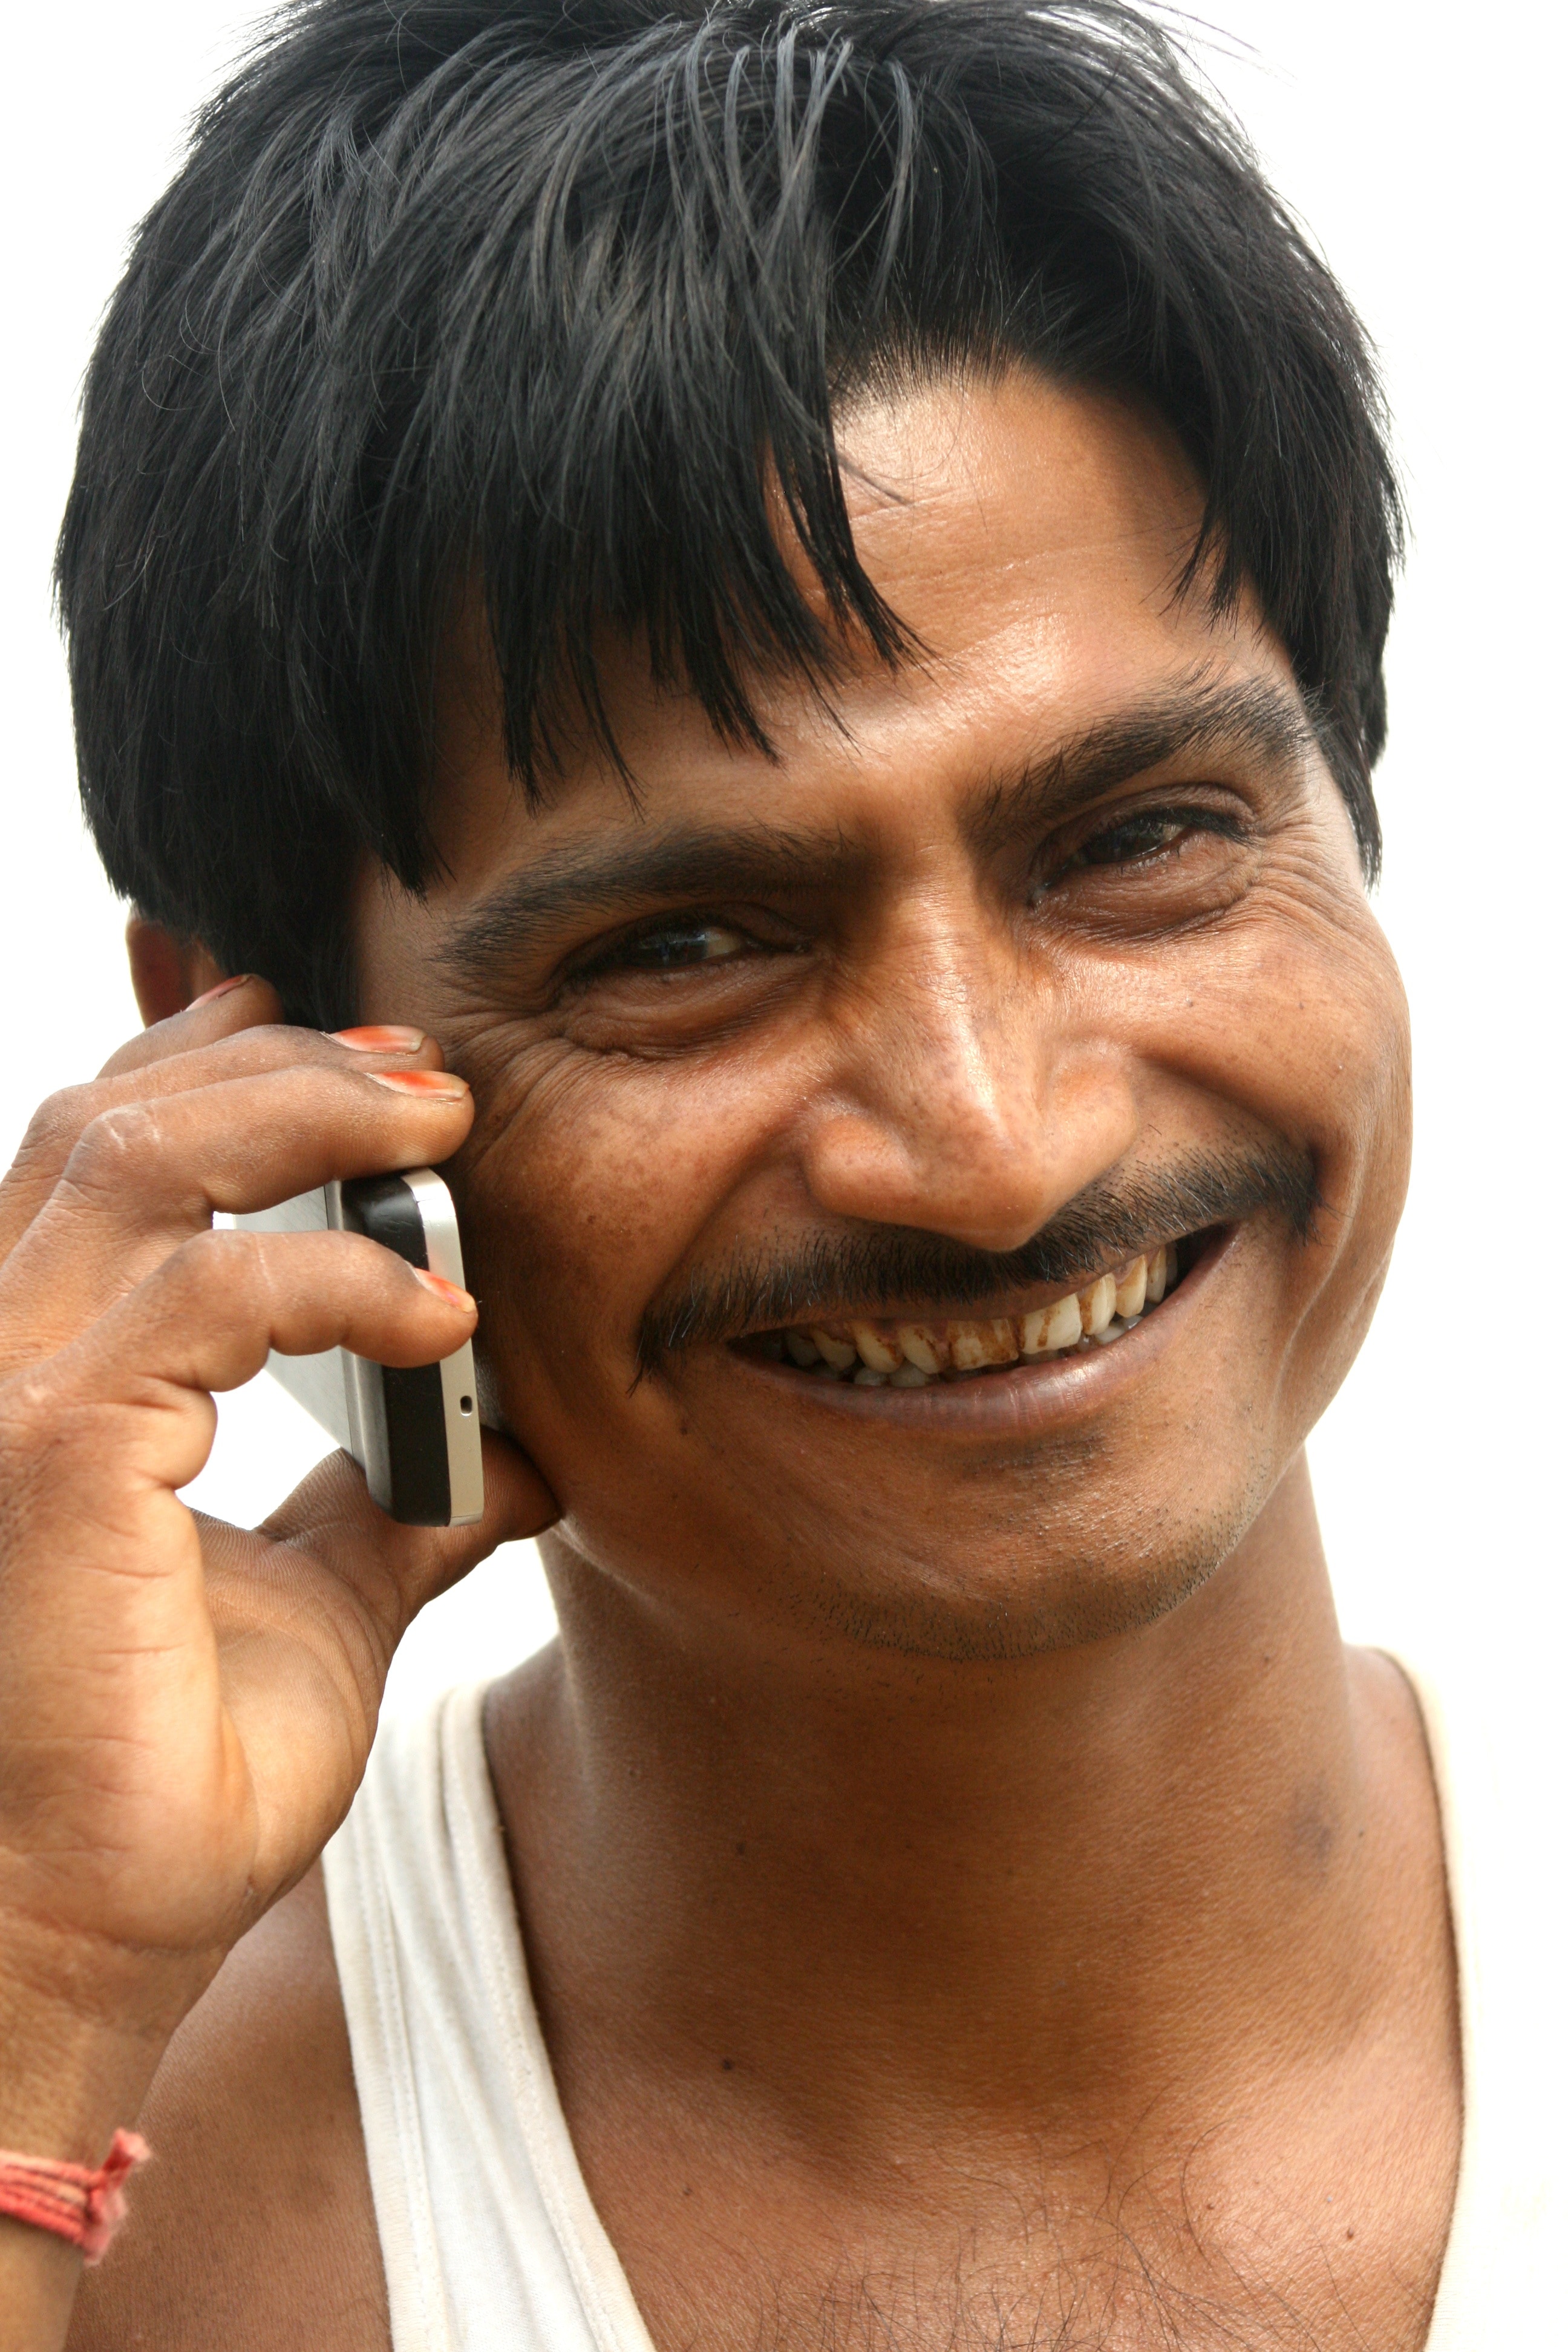 man wearing white tank top holding white and black candybar phone